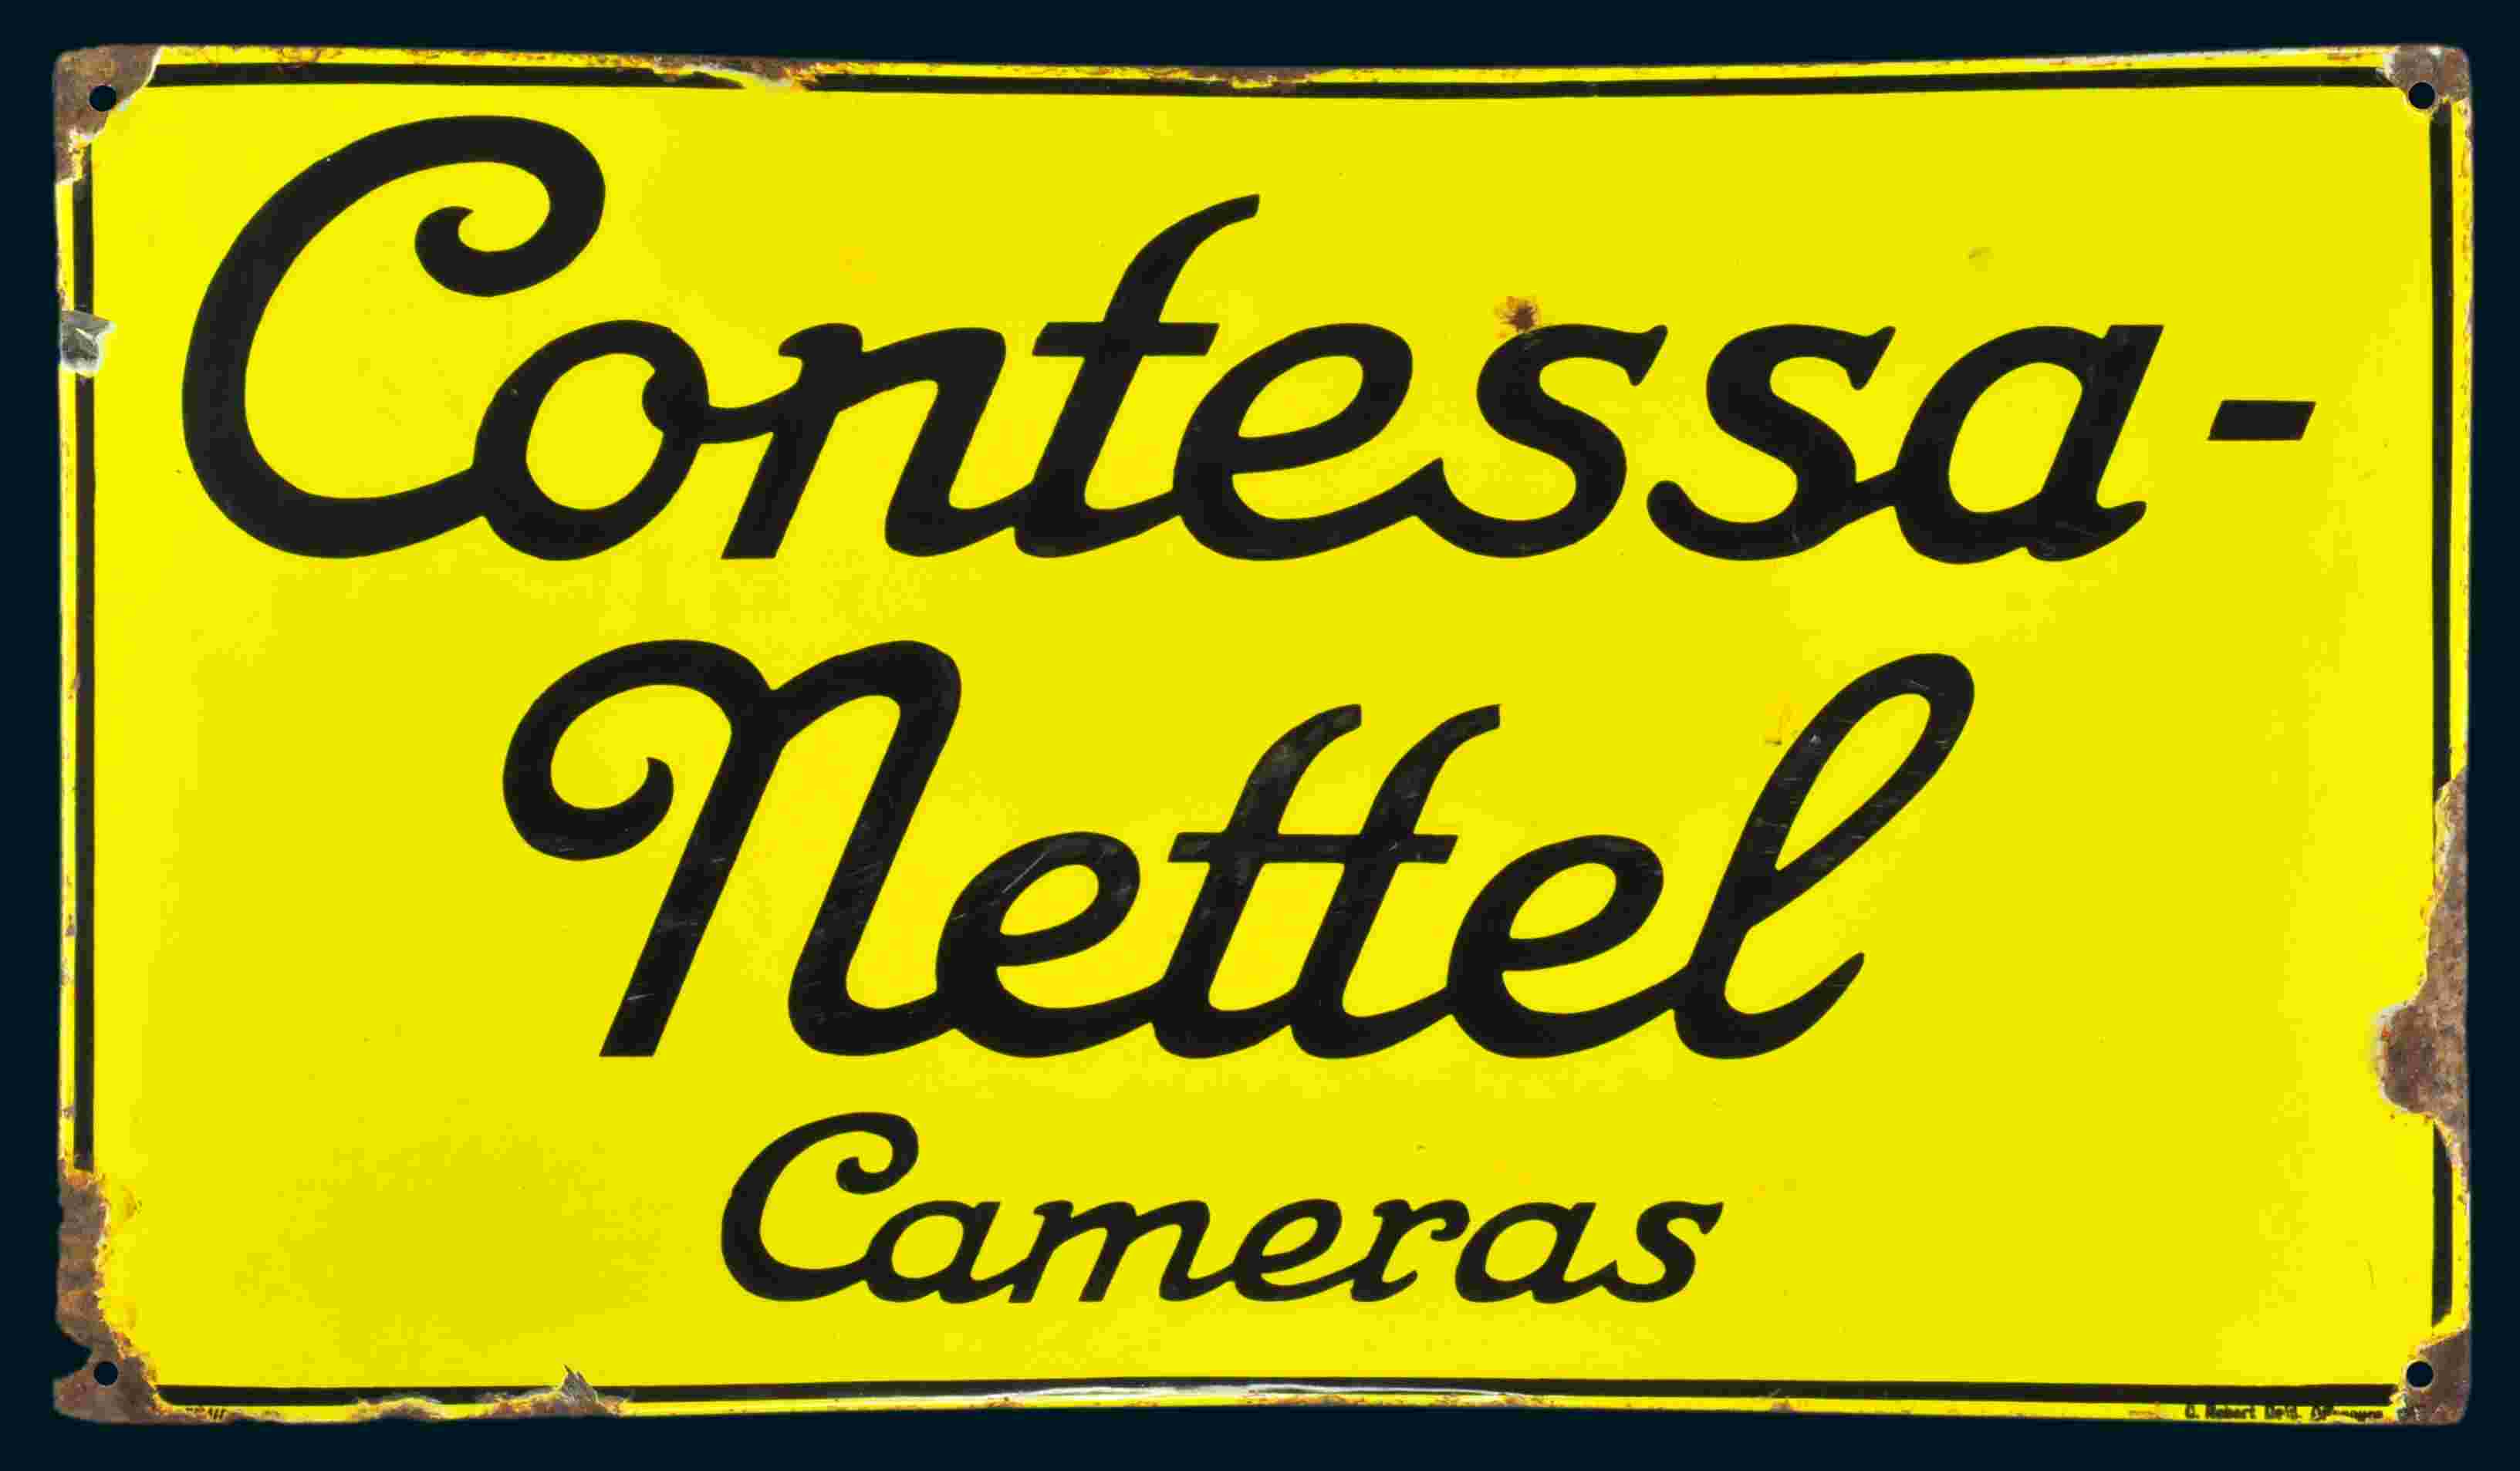 Contessa-Nettel Cameras 